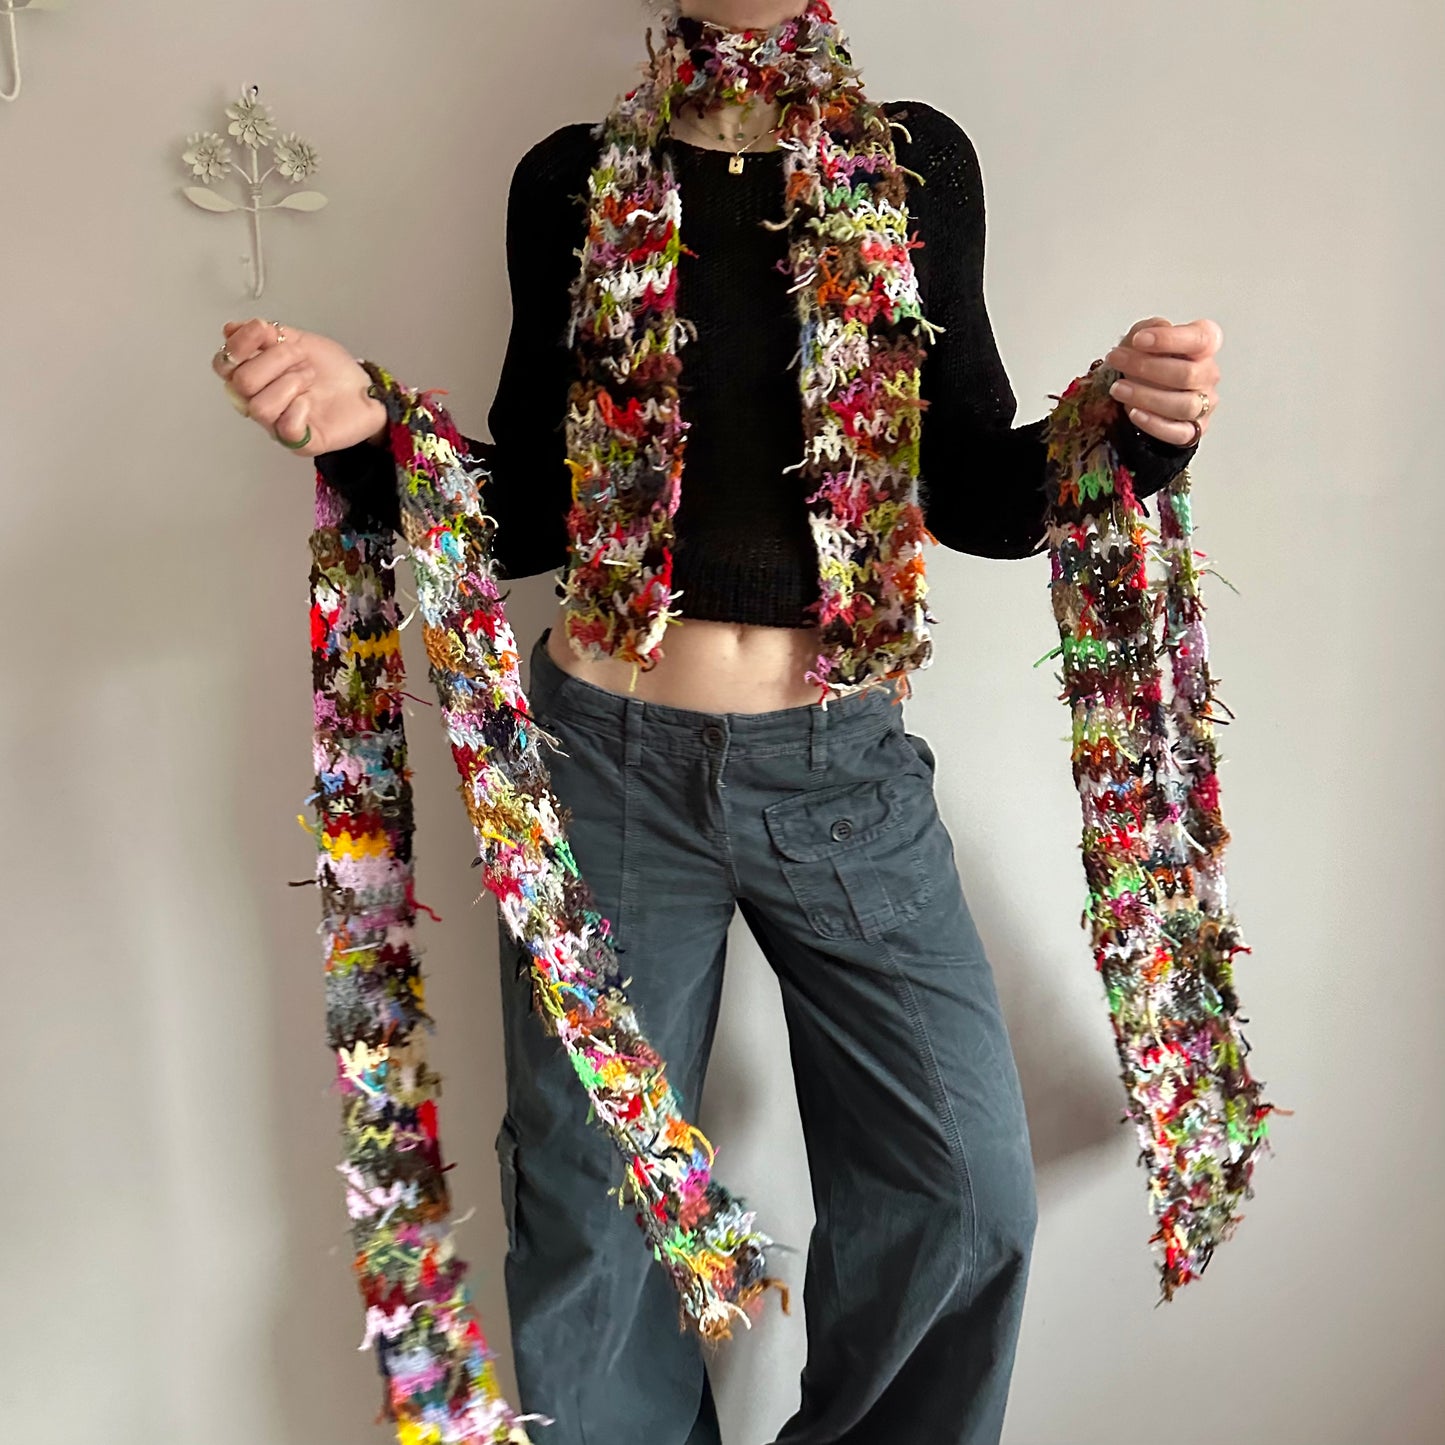 Scrappy skinny scarf #2 - handmade from leftover yarn scraps